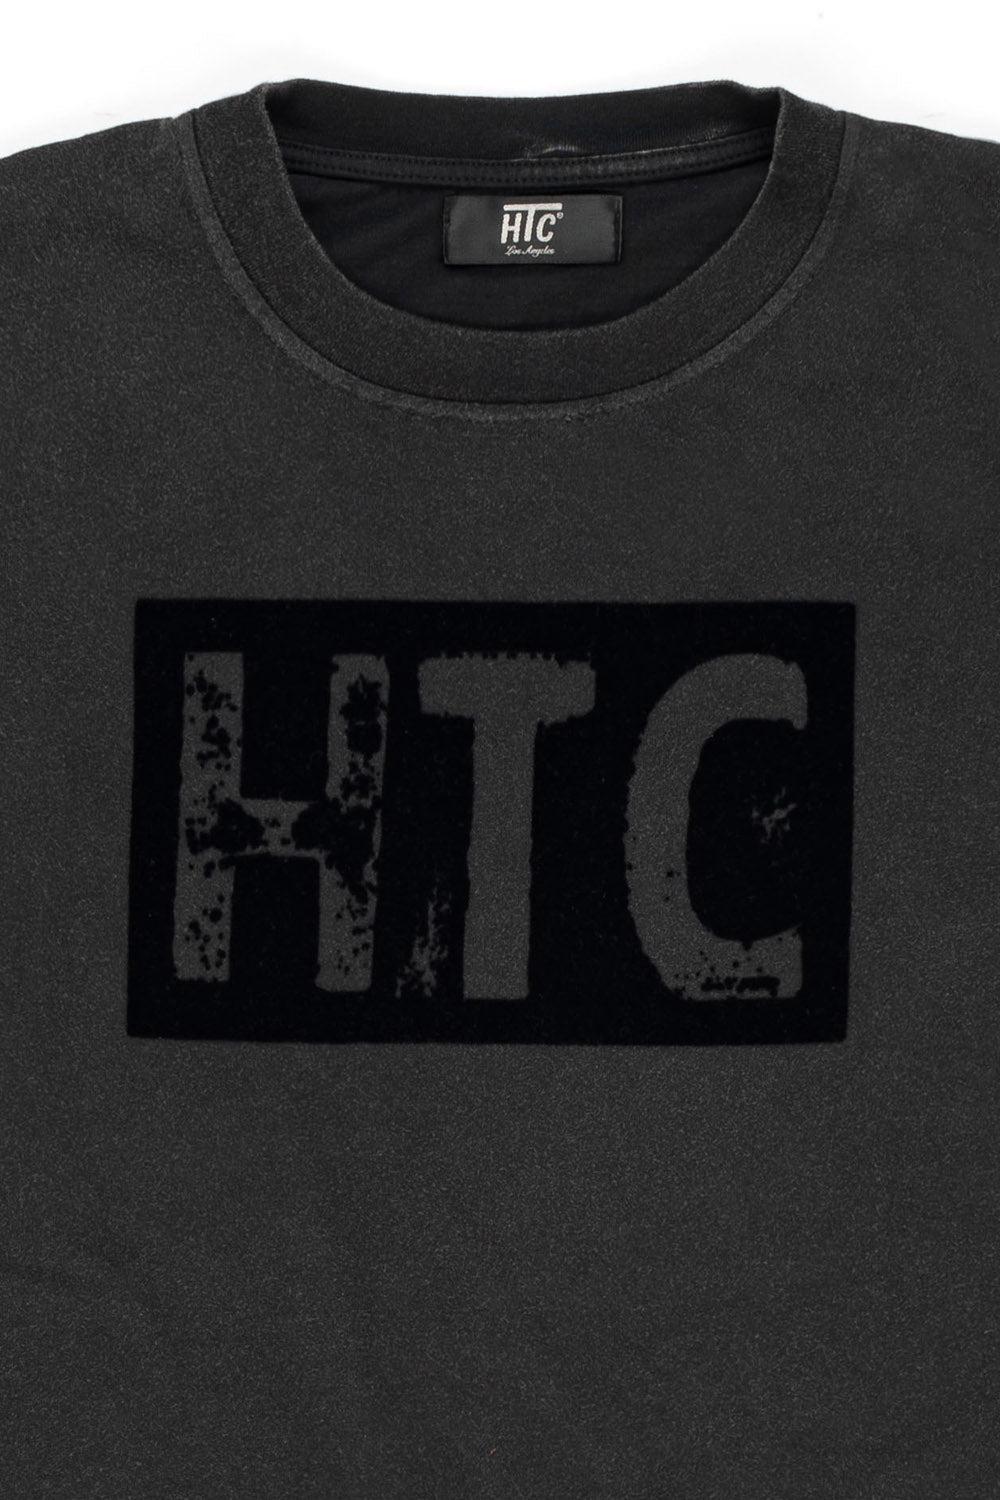 HTC SCRATCHED T-SHIRT